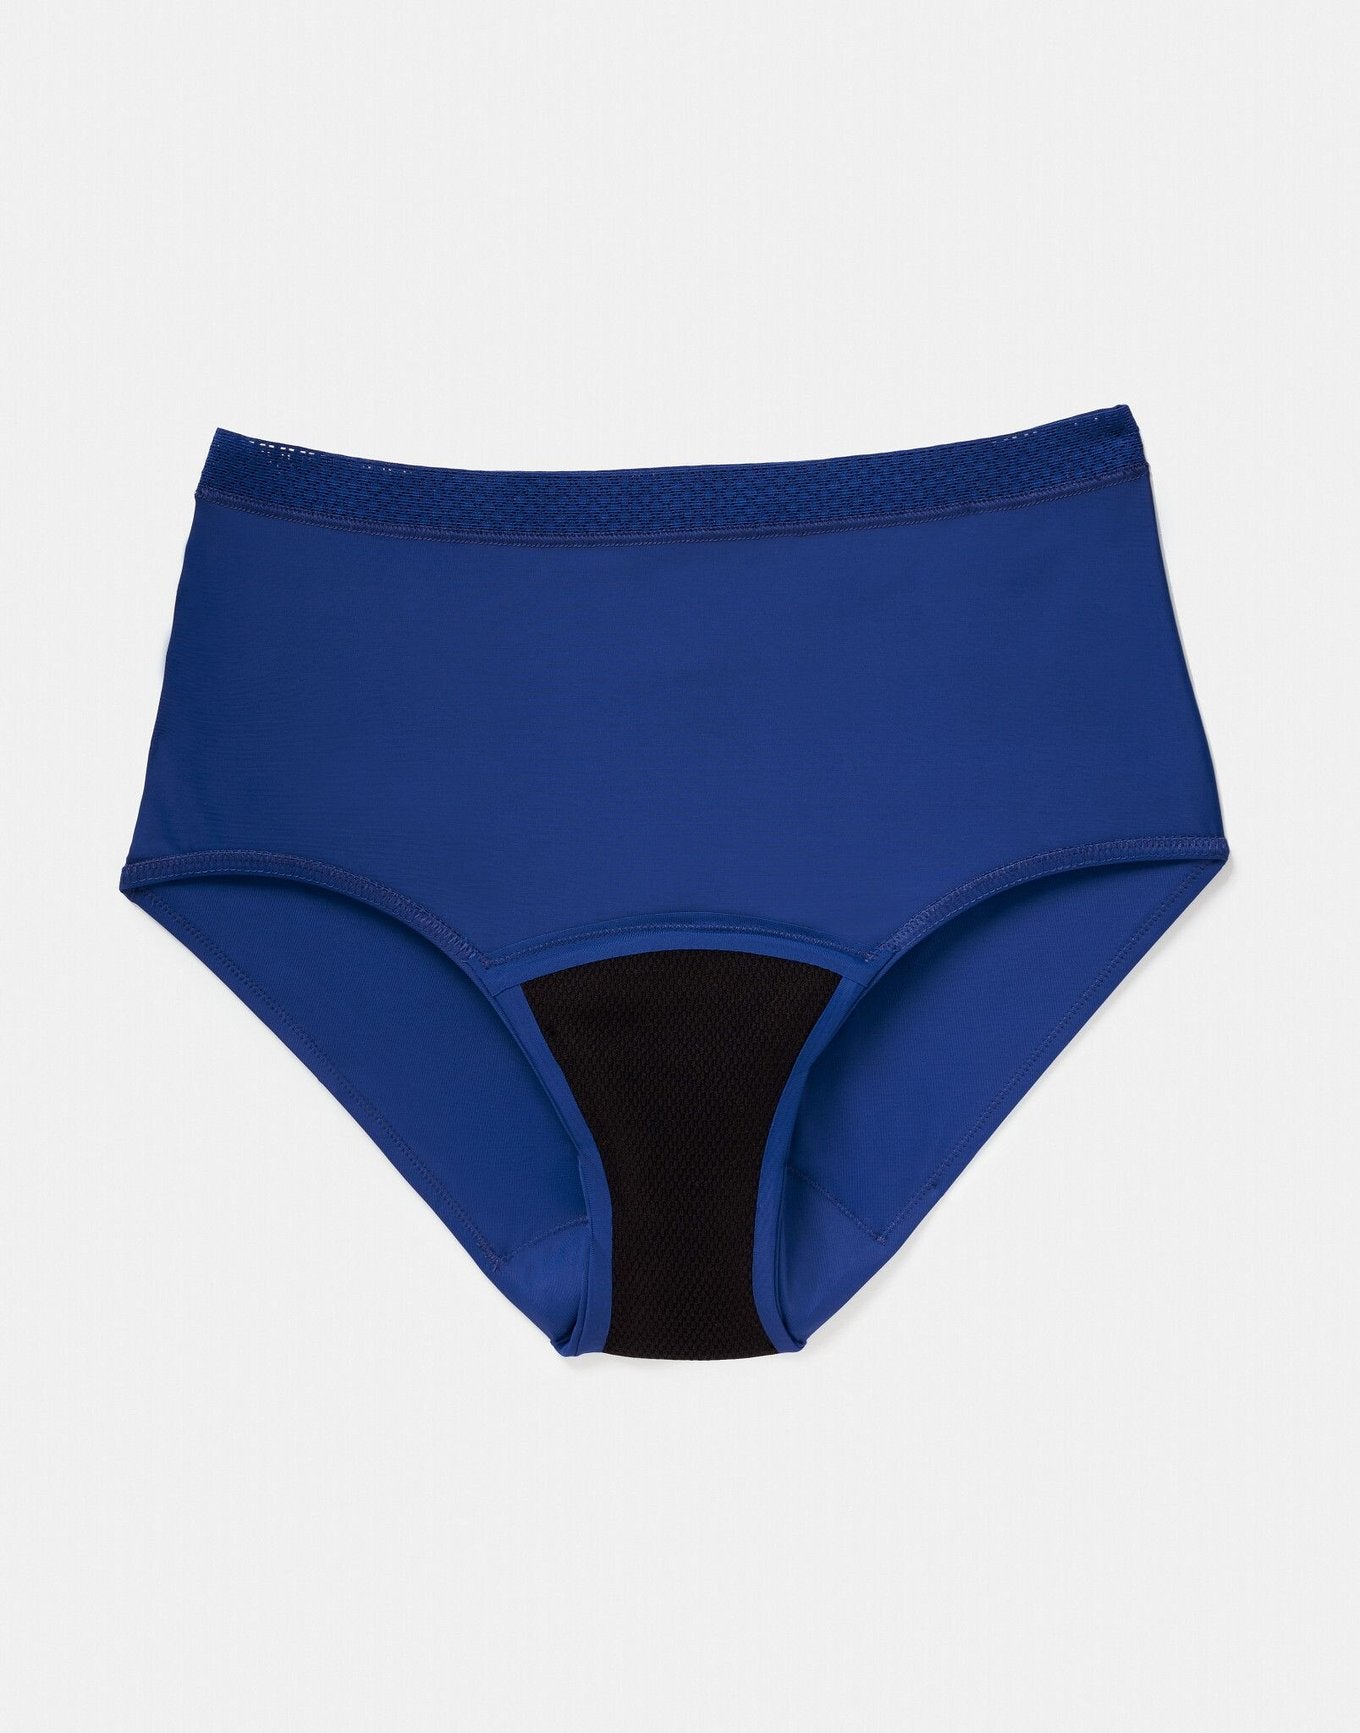 Emily Shortie Dark Blue Plus Period Panties, 3X-4X